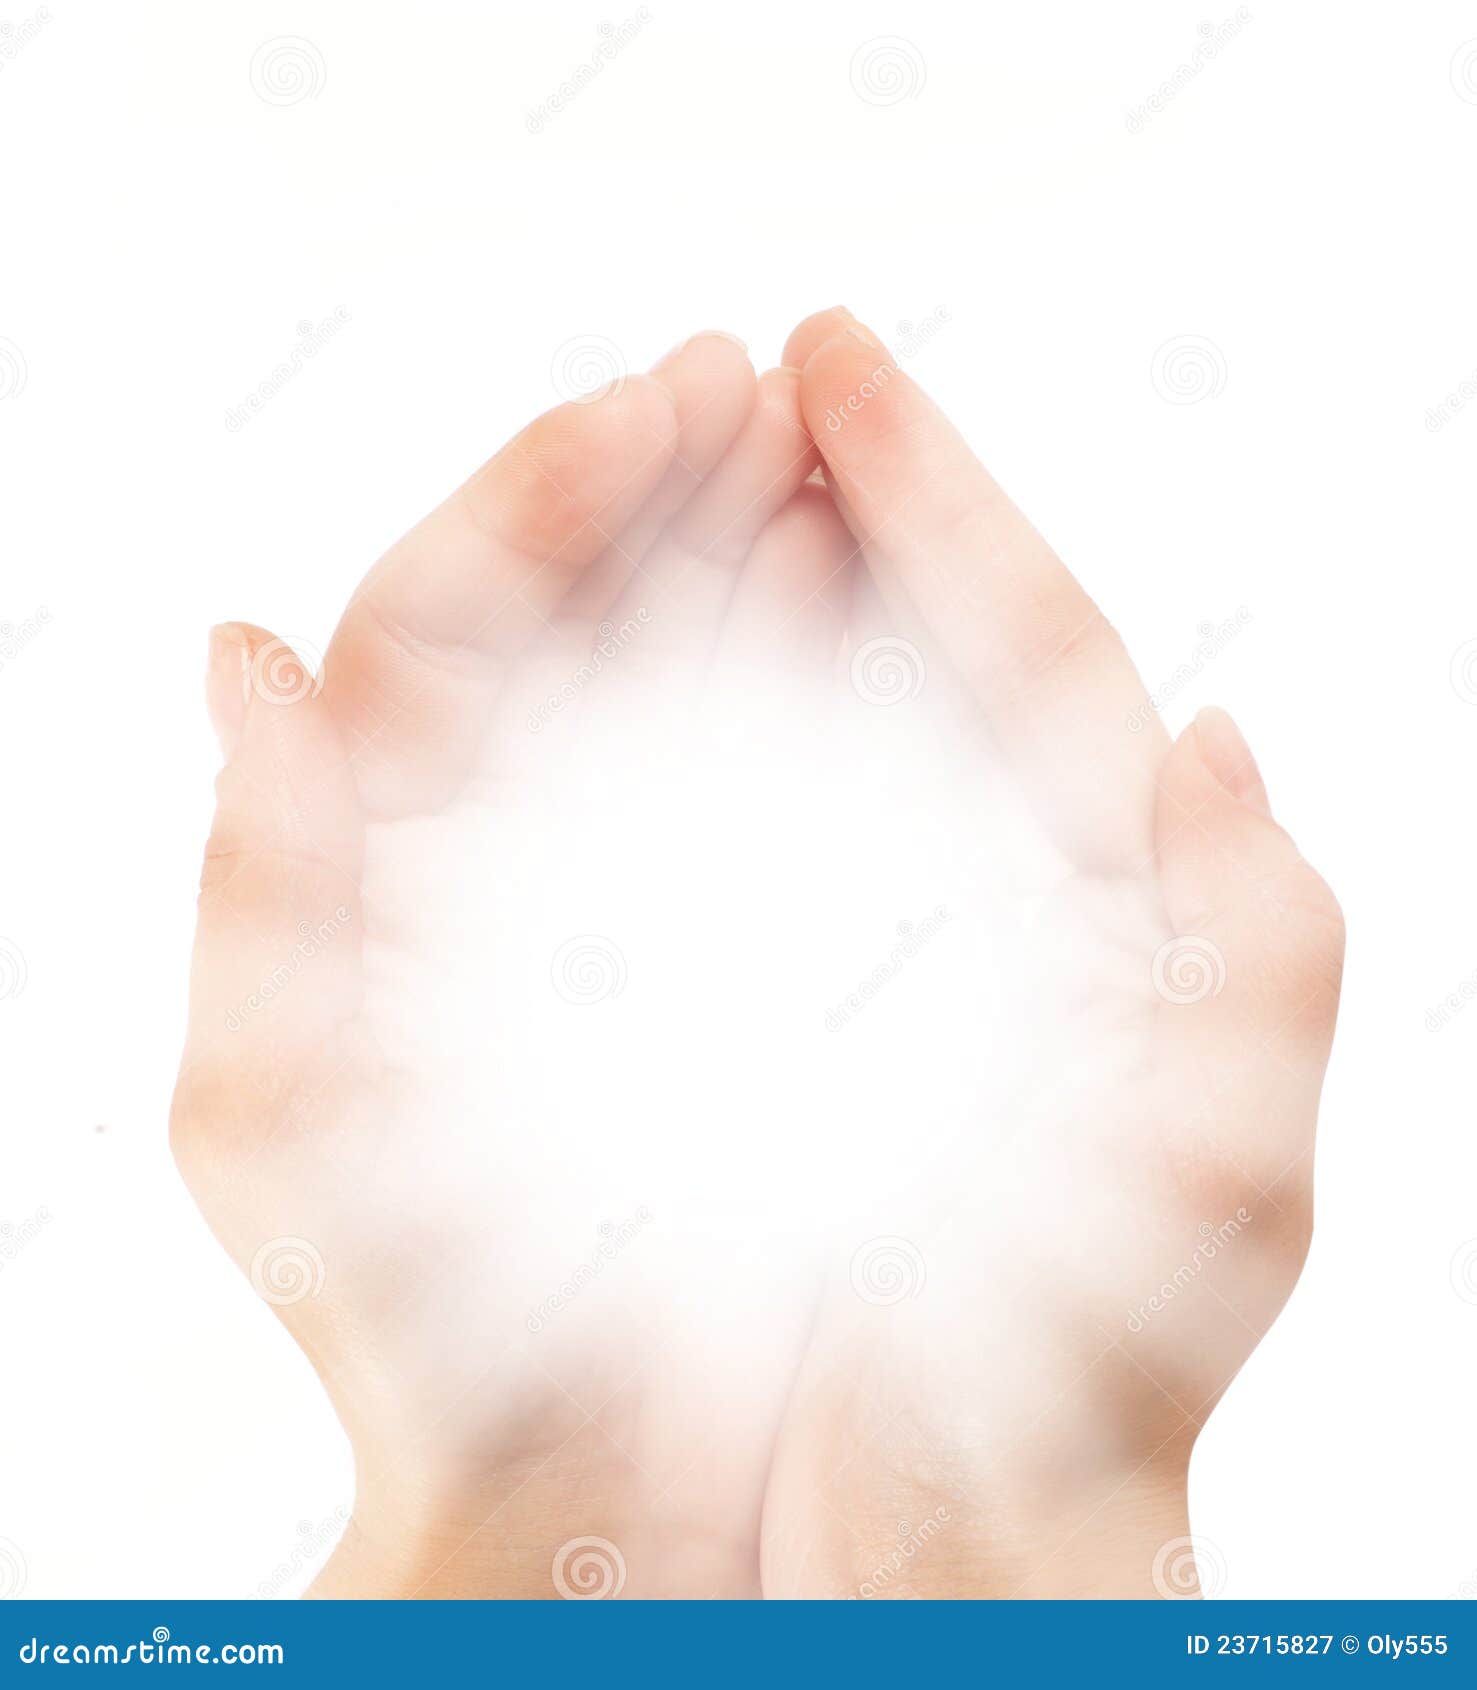 female hands holding a brilliant shine in the dark